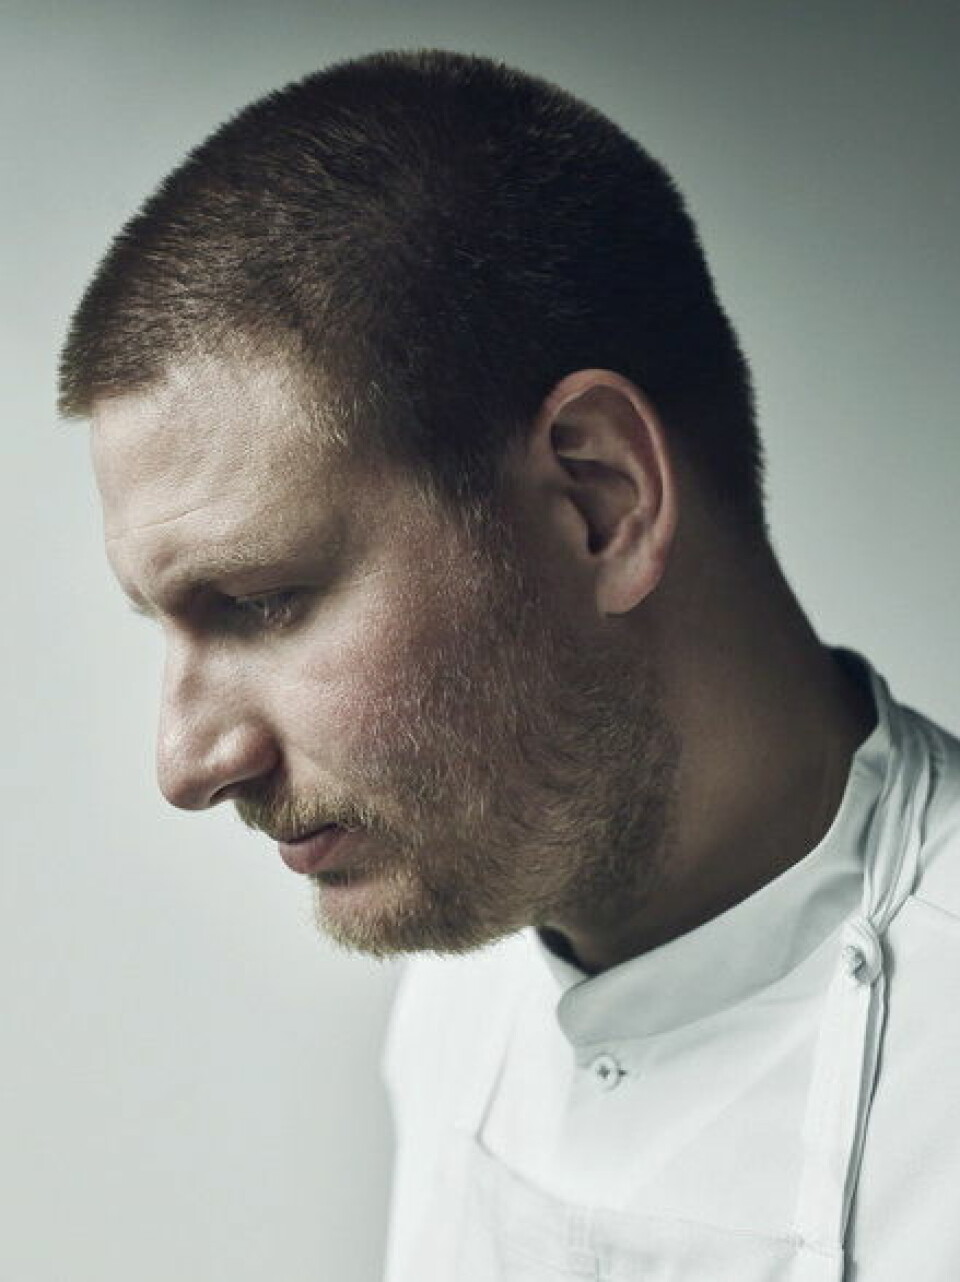 Esben Holmboe Bang leder Maaemo, Norges første restaurant med tre stjerner i Guide Michelin. (Foto Tuukka Koski)